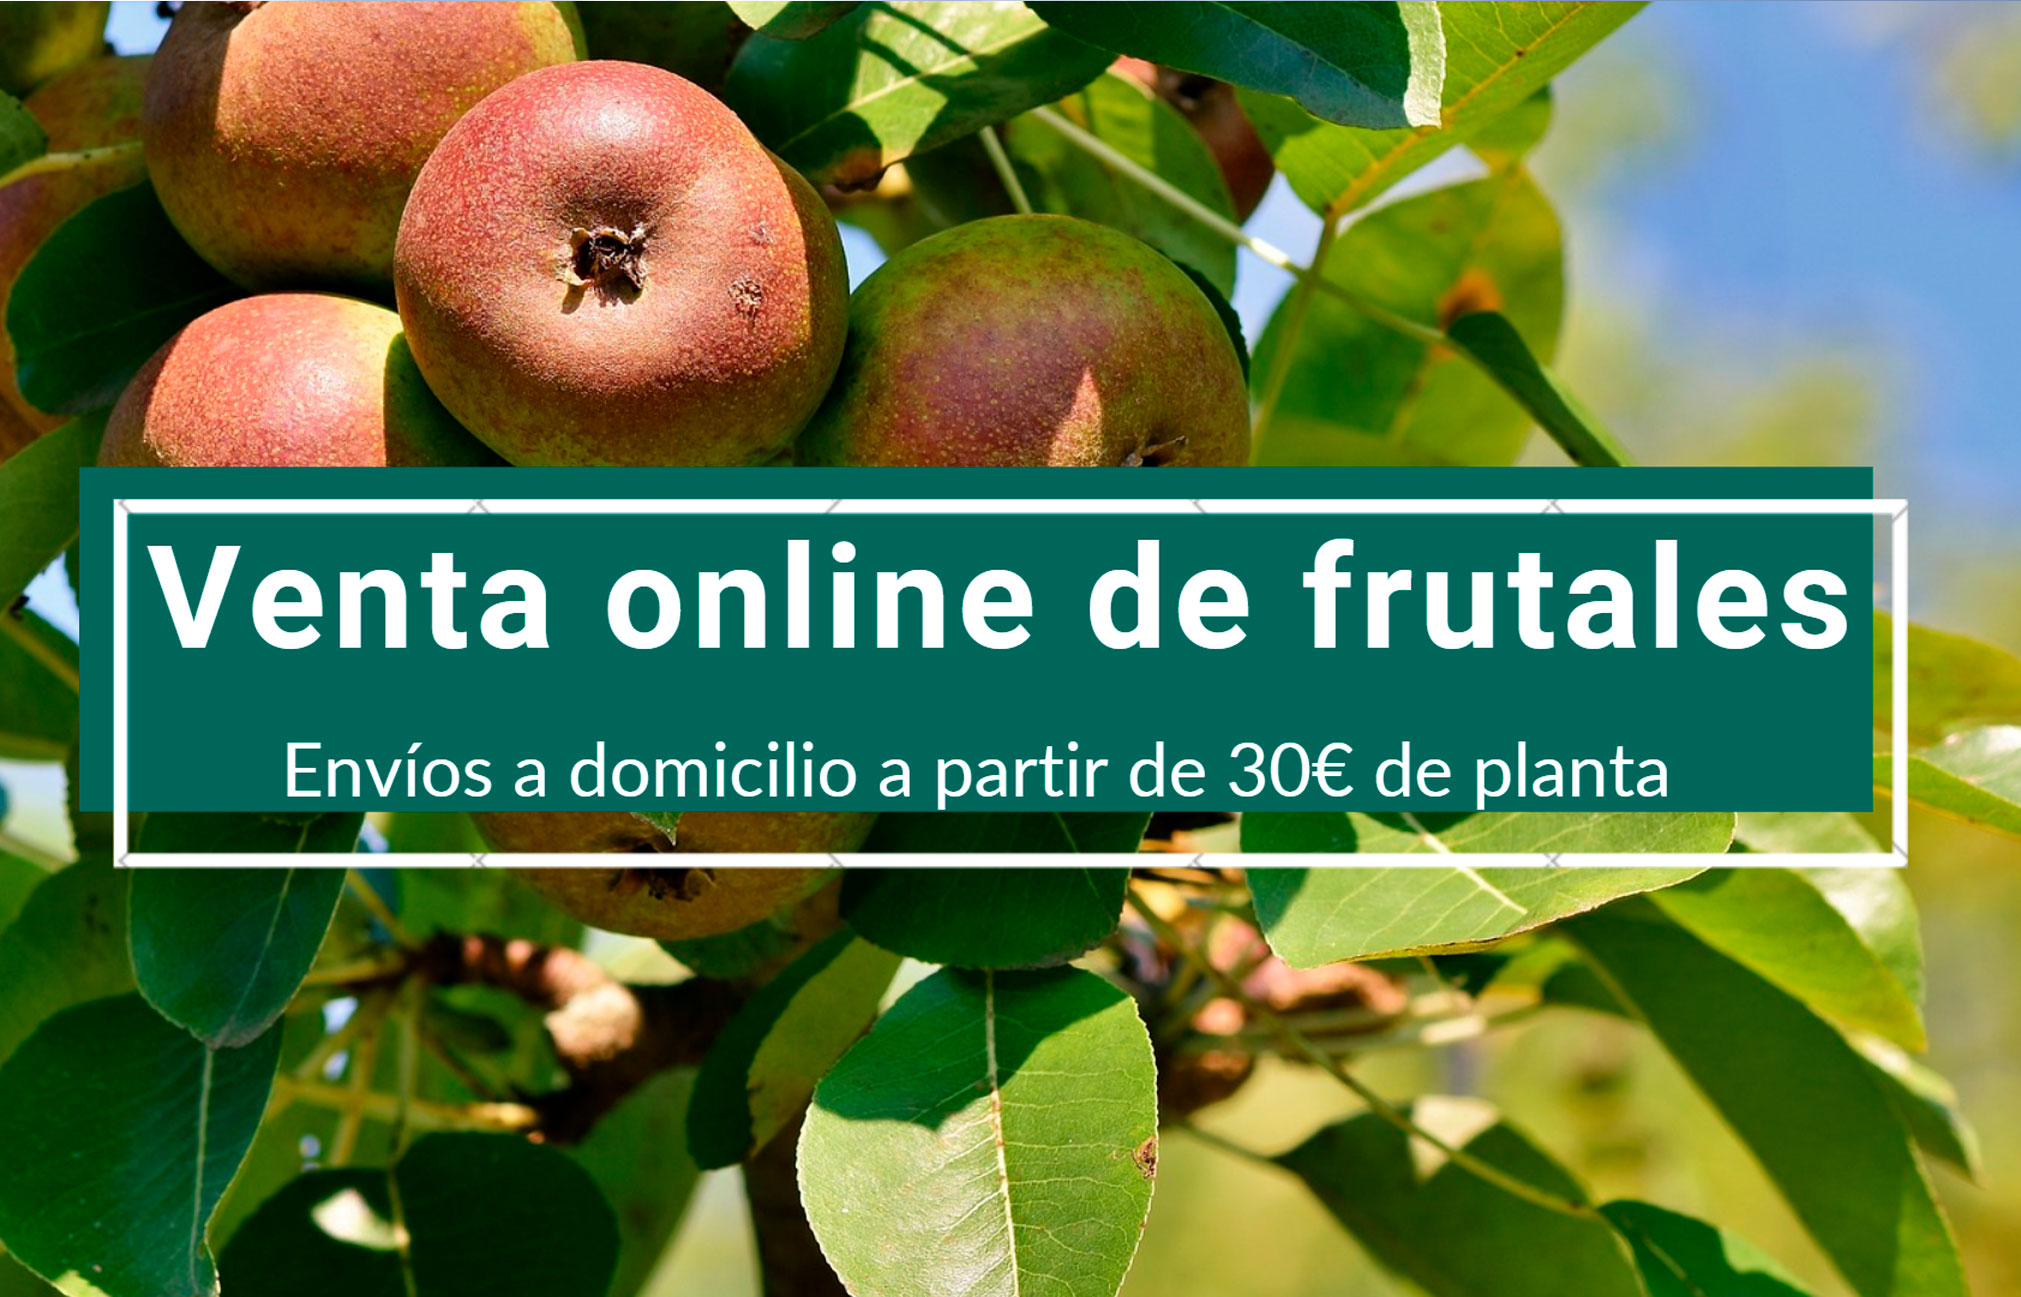 Venta online de frutales